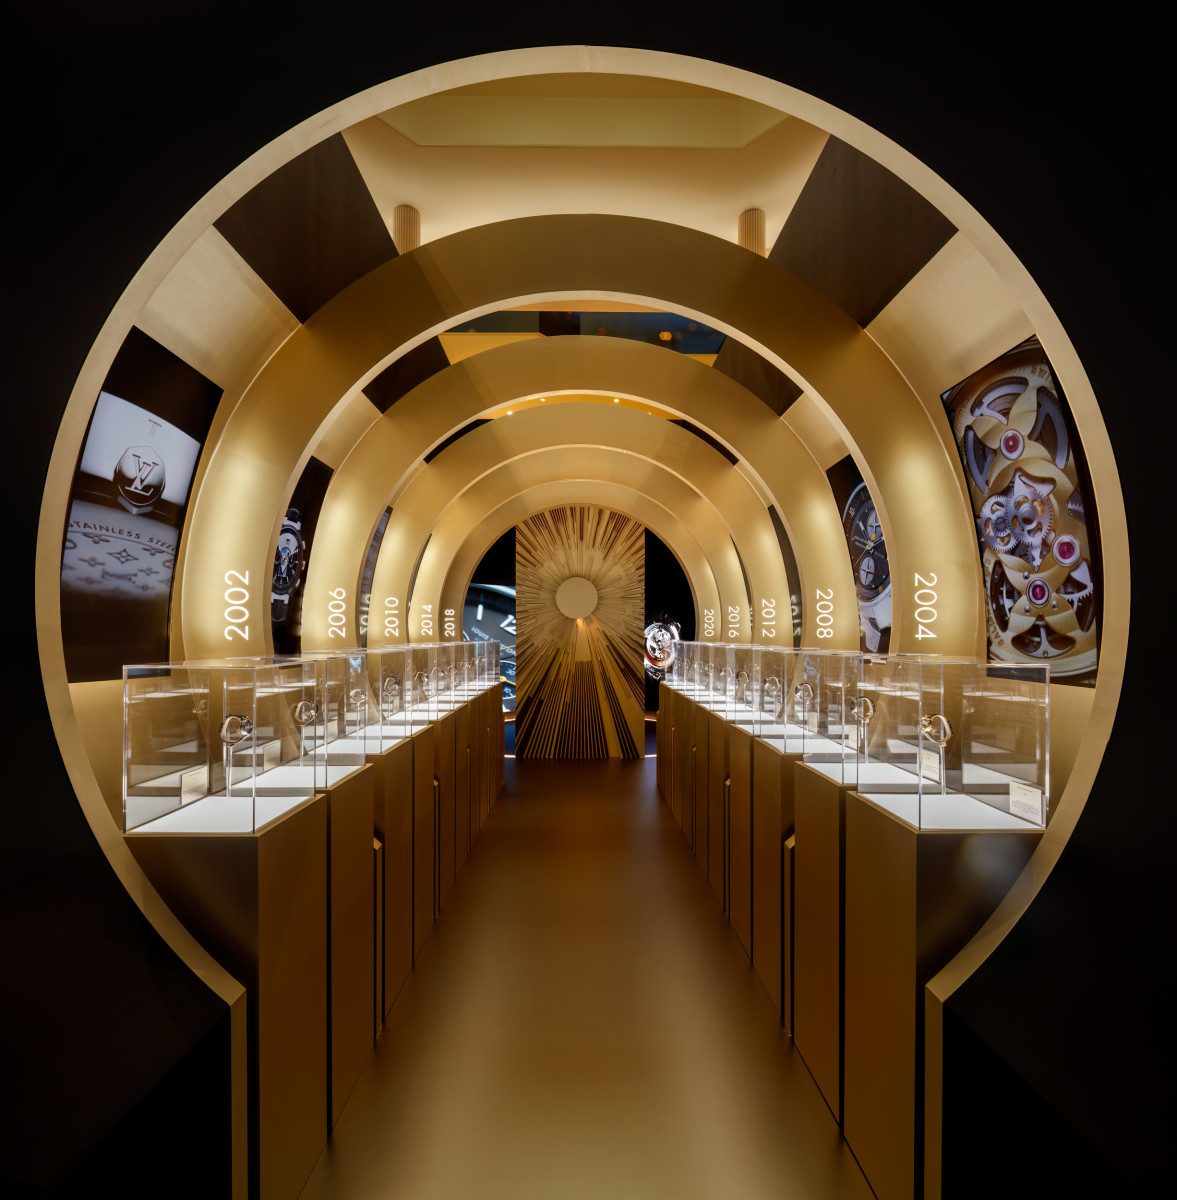 Louis Vuitton Tambour 20th Anniversary Exhibition Opens in California